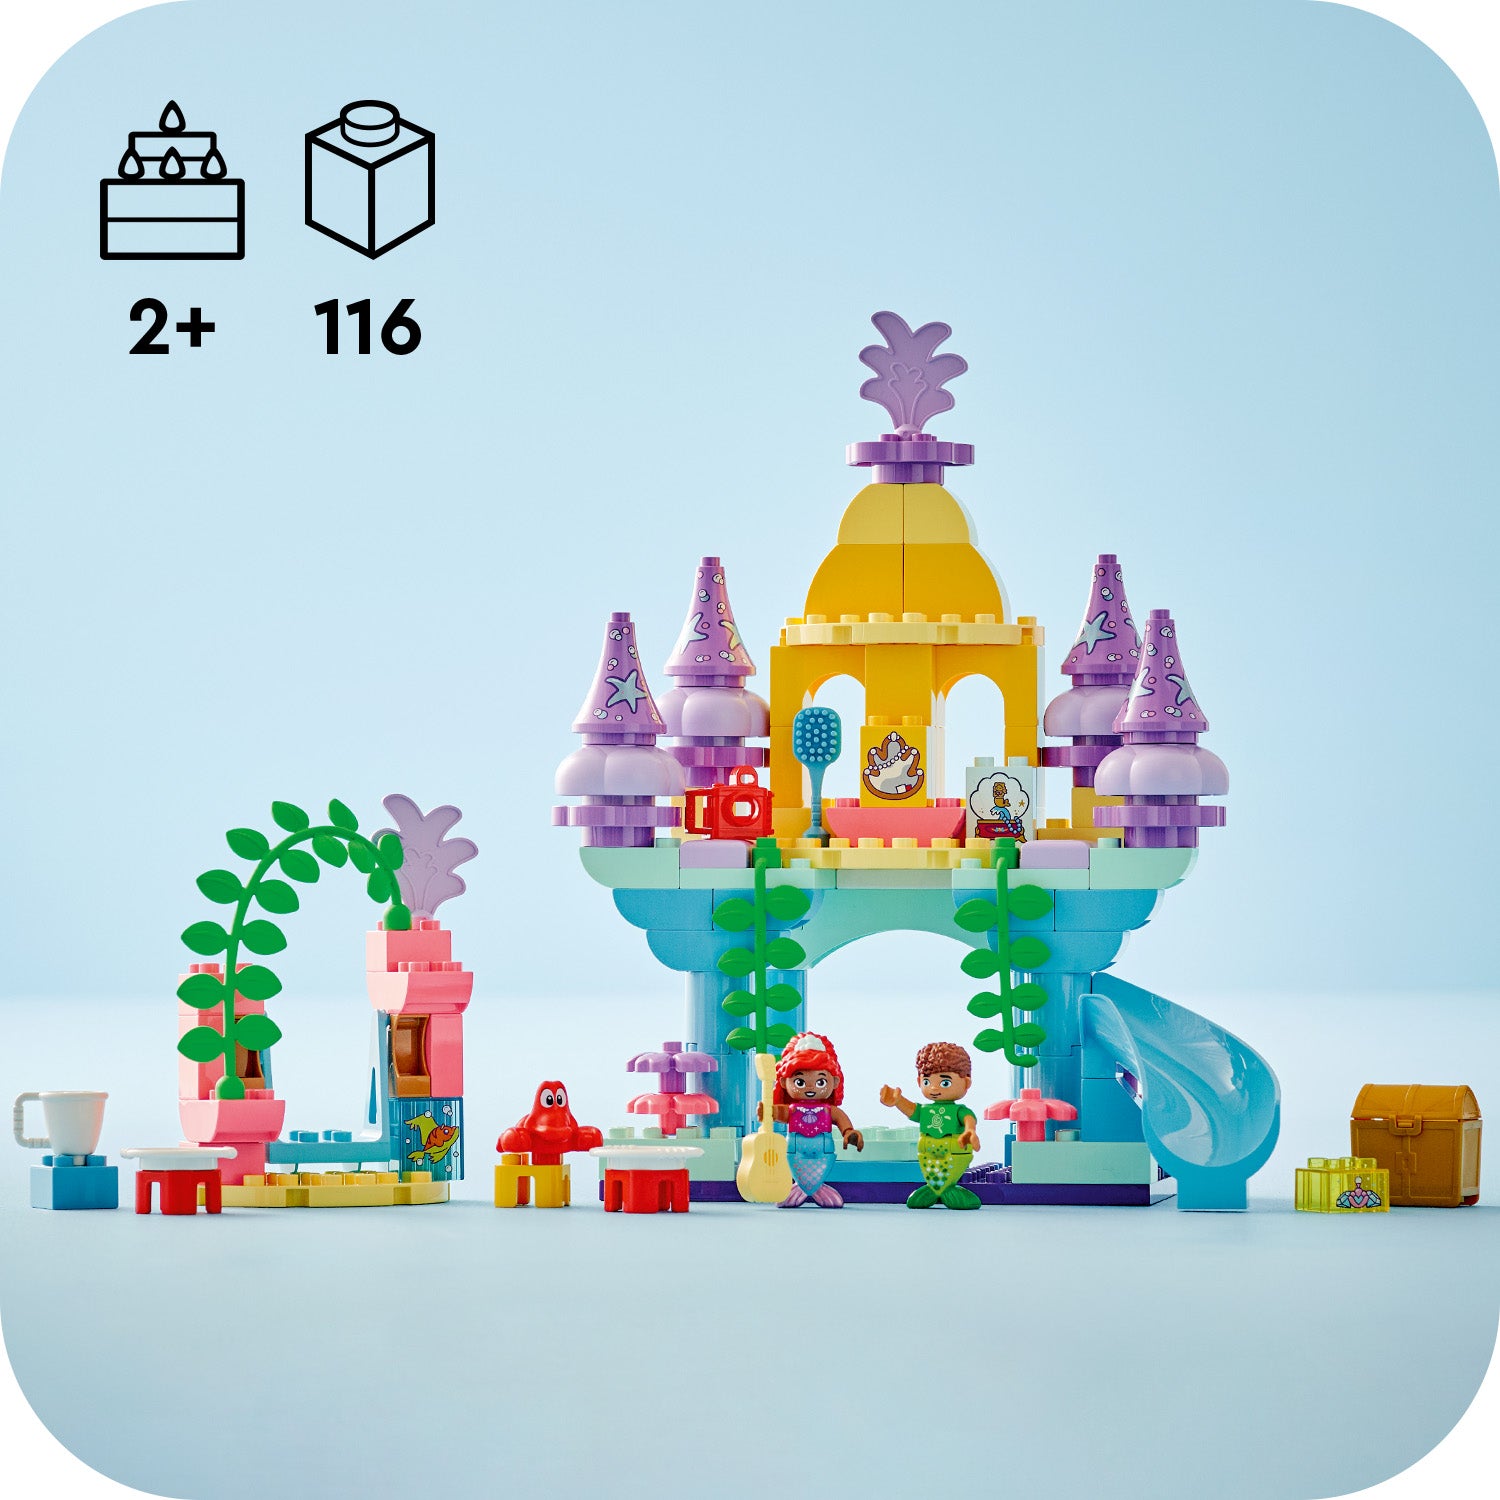 Lego 10435 Disney Ariels Magical Underwater Palace